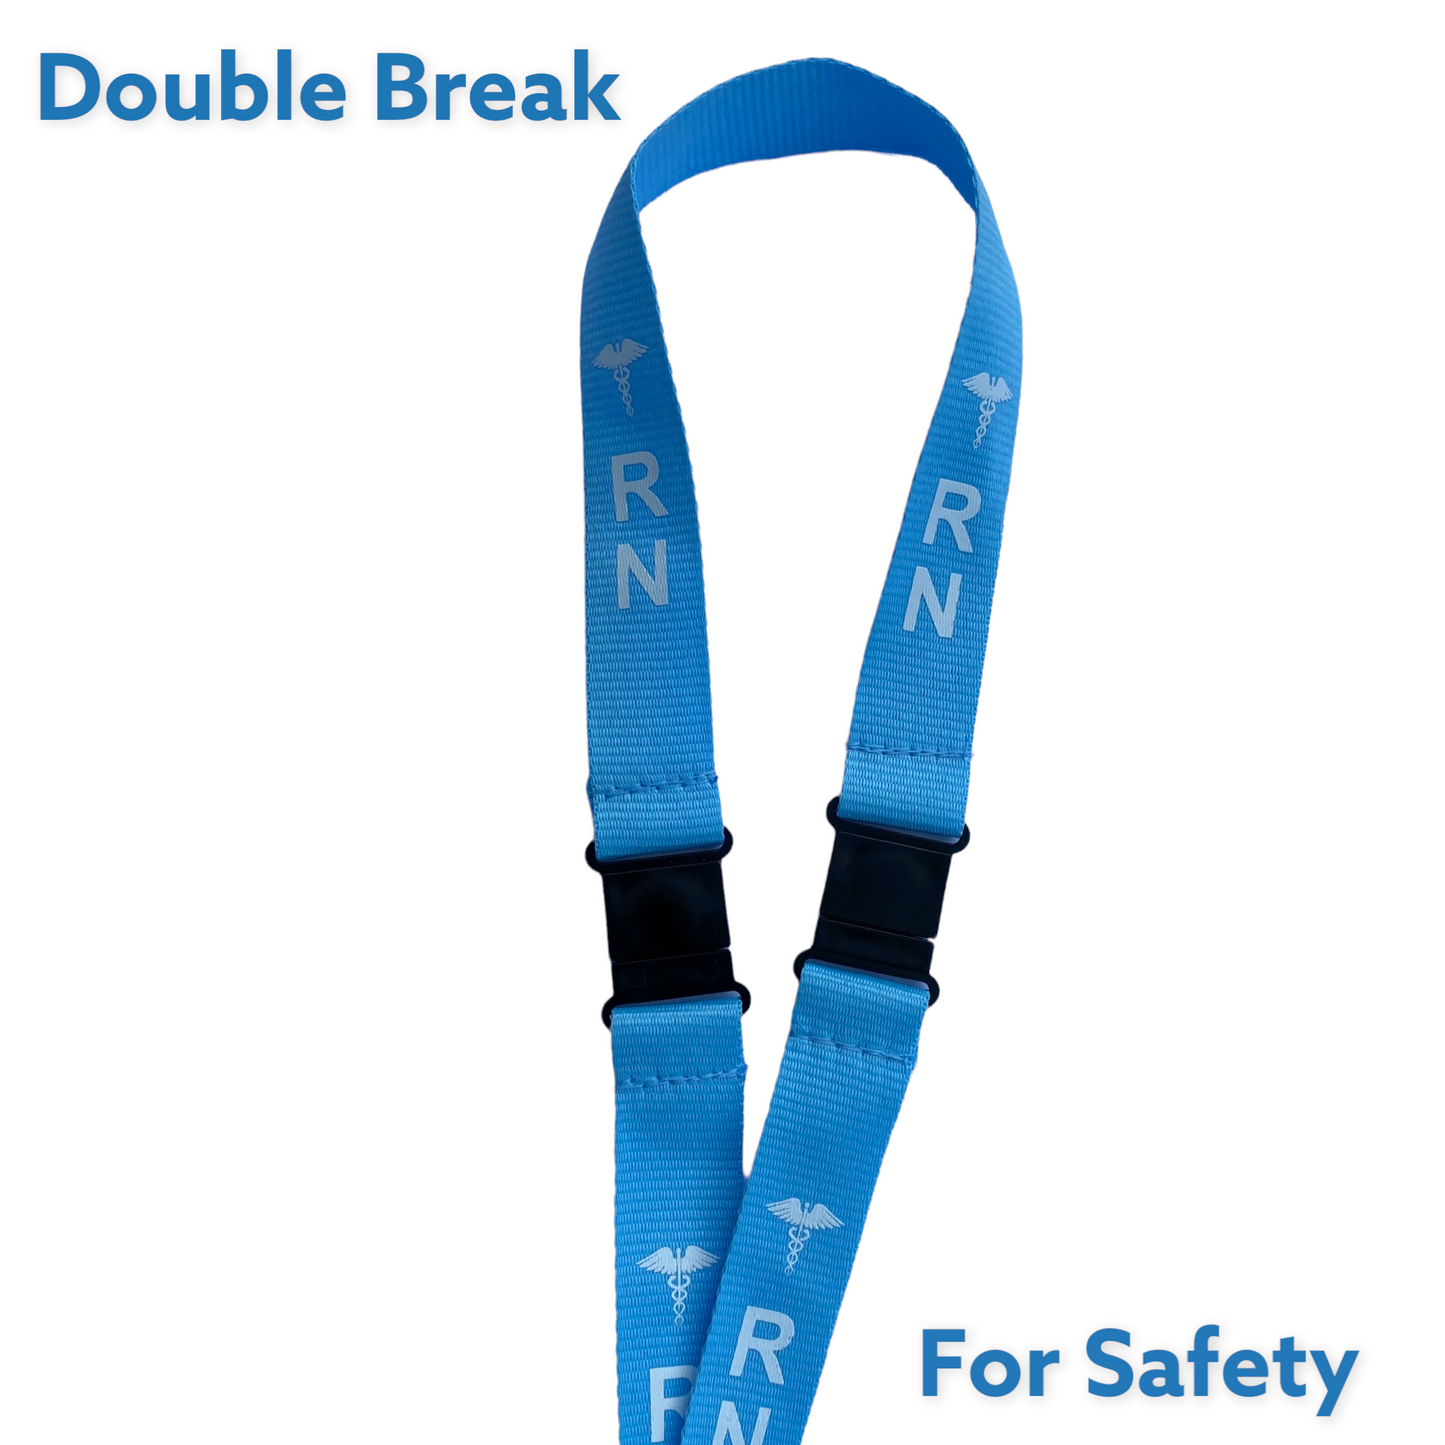 BLUE RN LANYARD, Badge holder/key holder with 2 breakaways, Nurse Gift